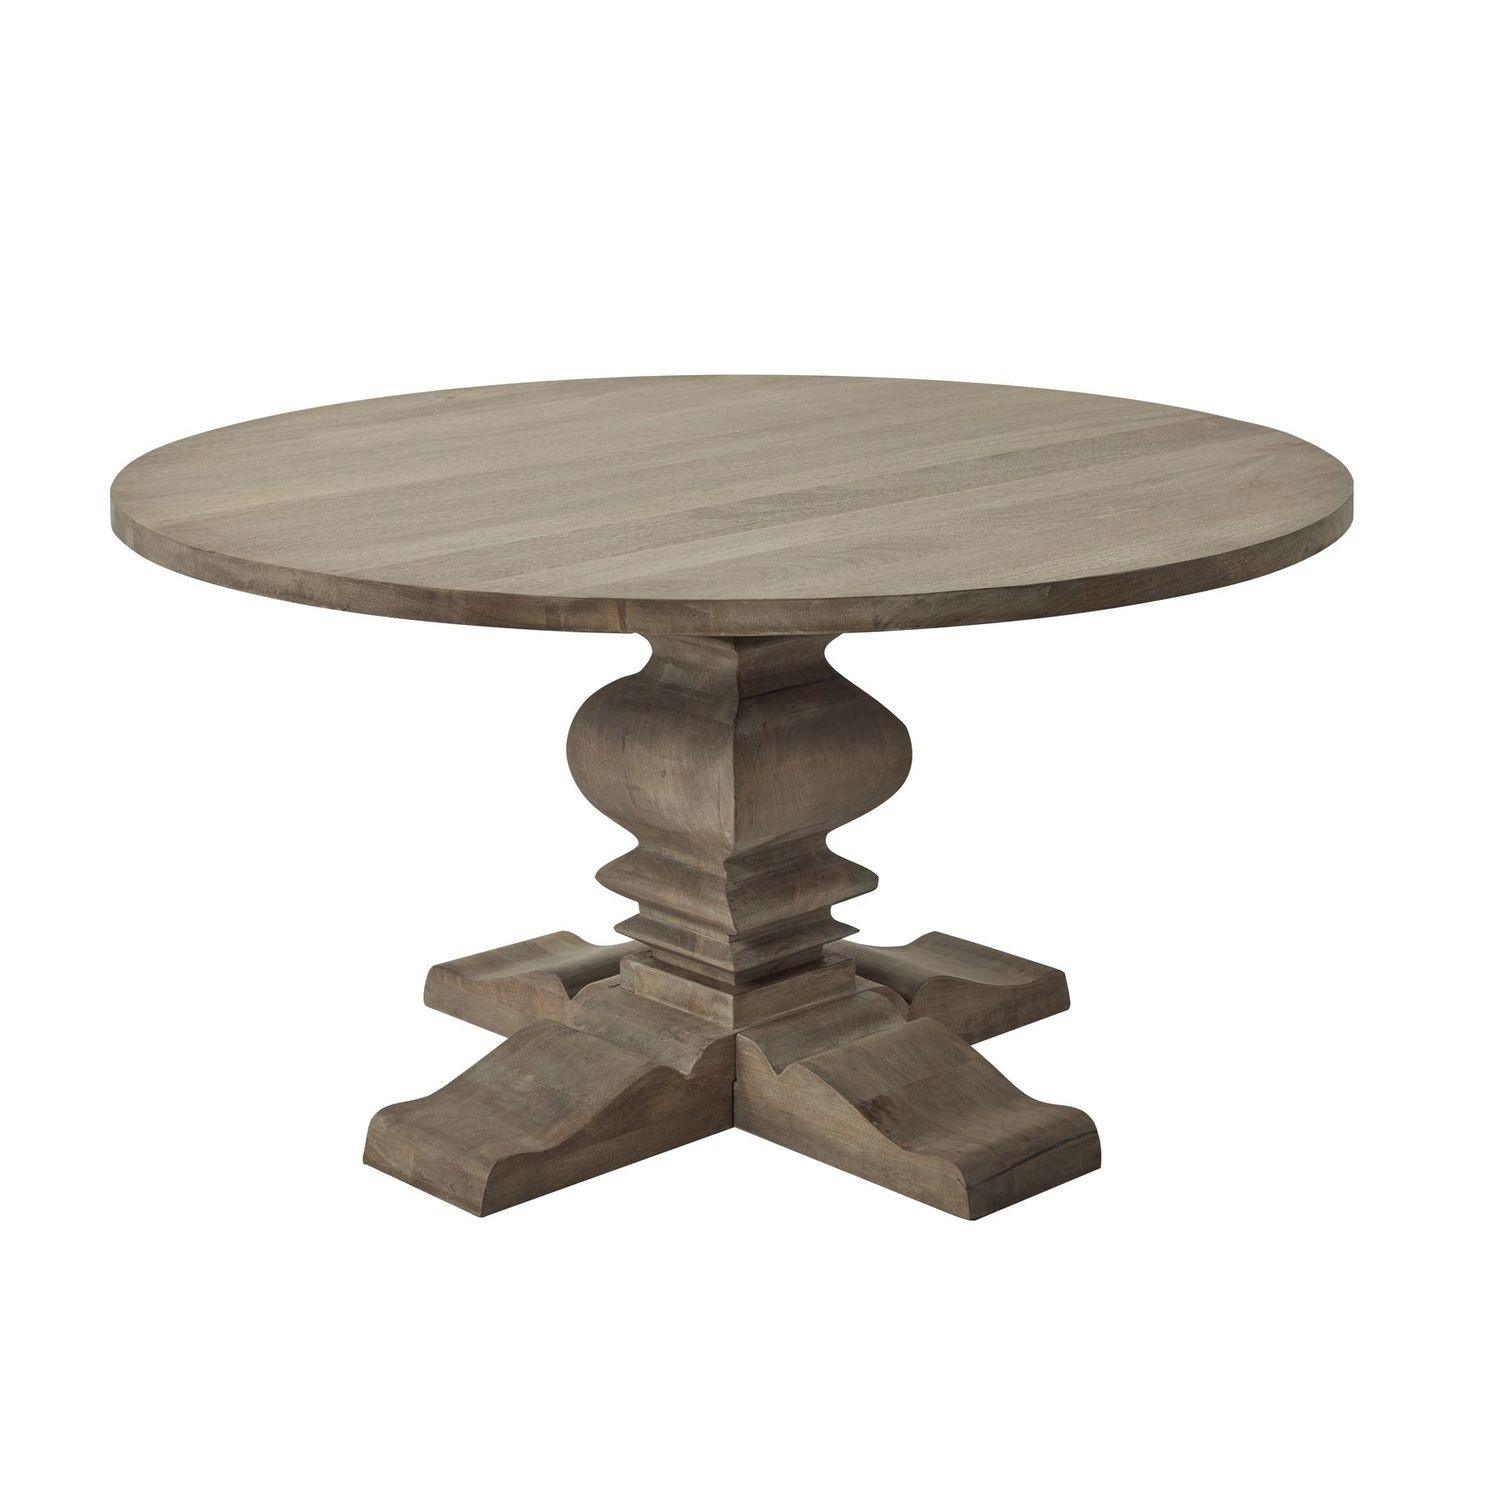 Photo of Soild wood round pedestal dining table